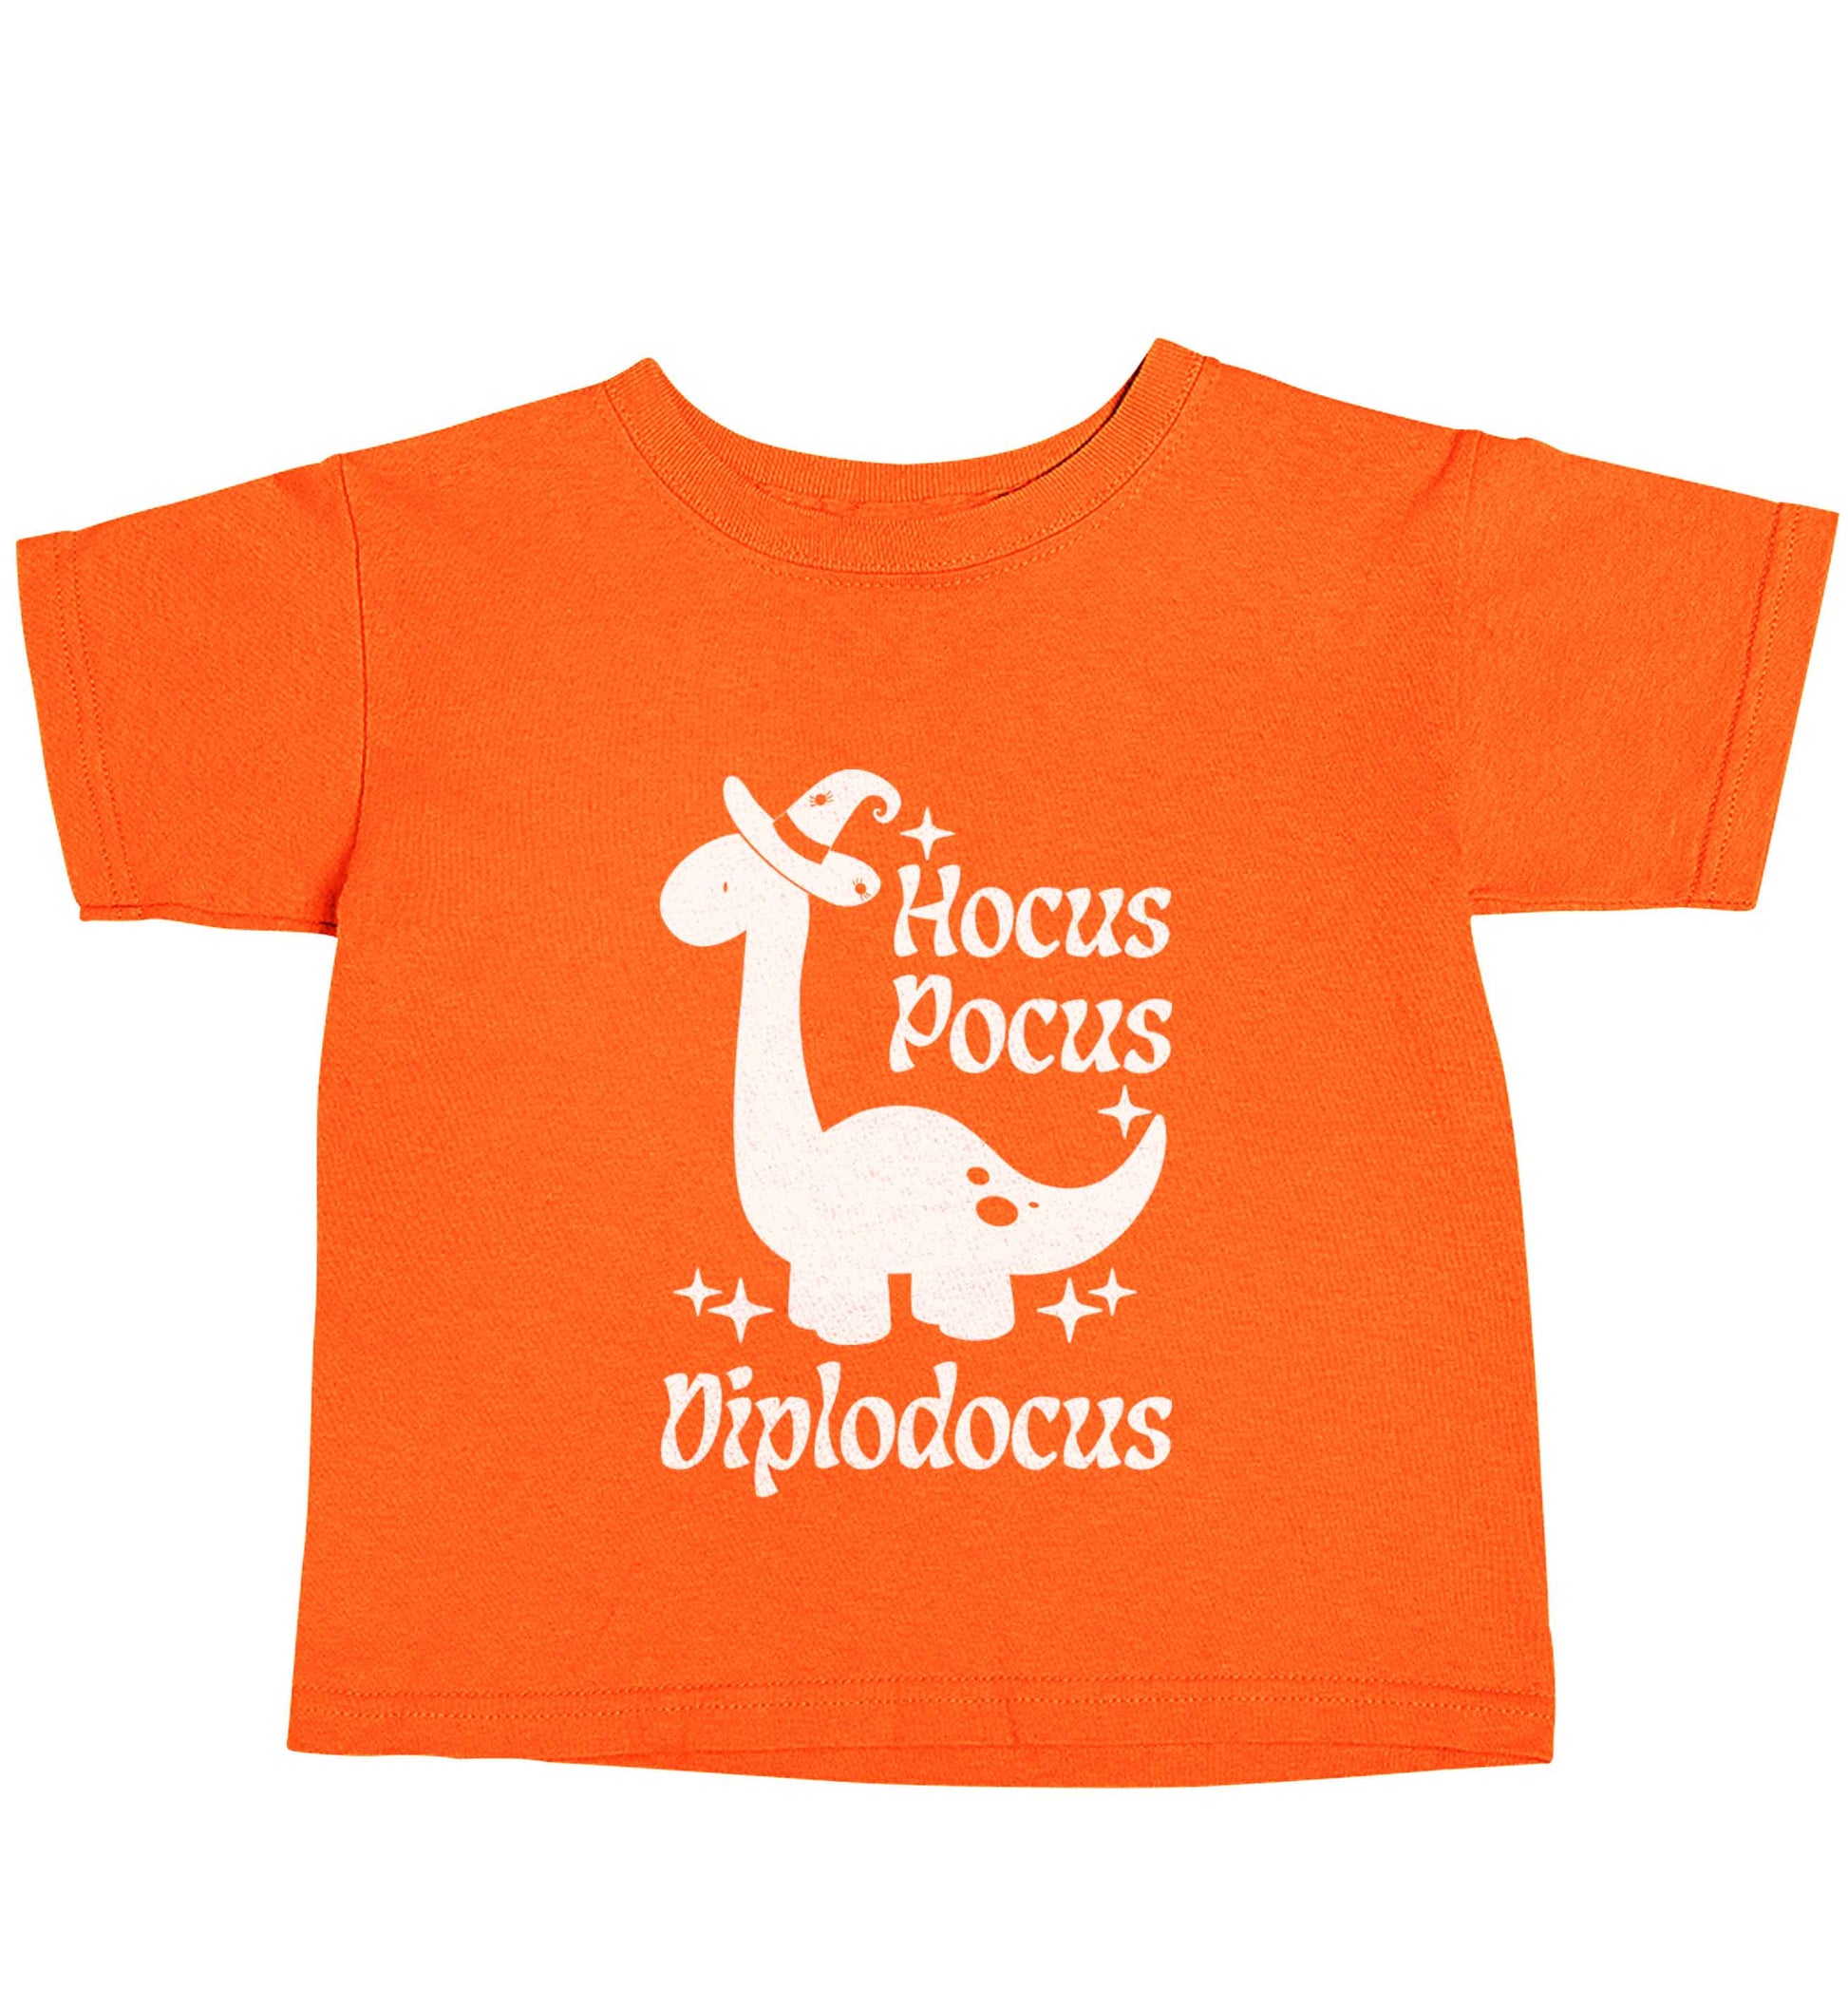 Hocus pocus diplodocus Kit orange baby toddler Tshirt 2 Years